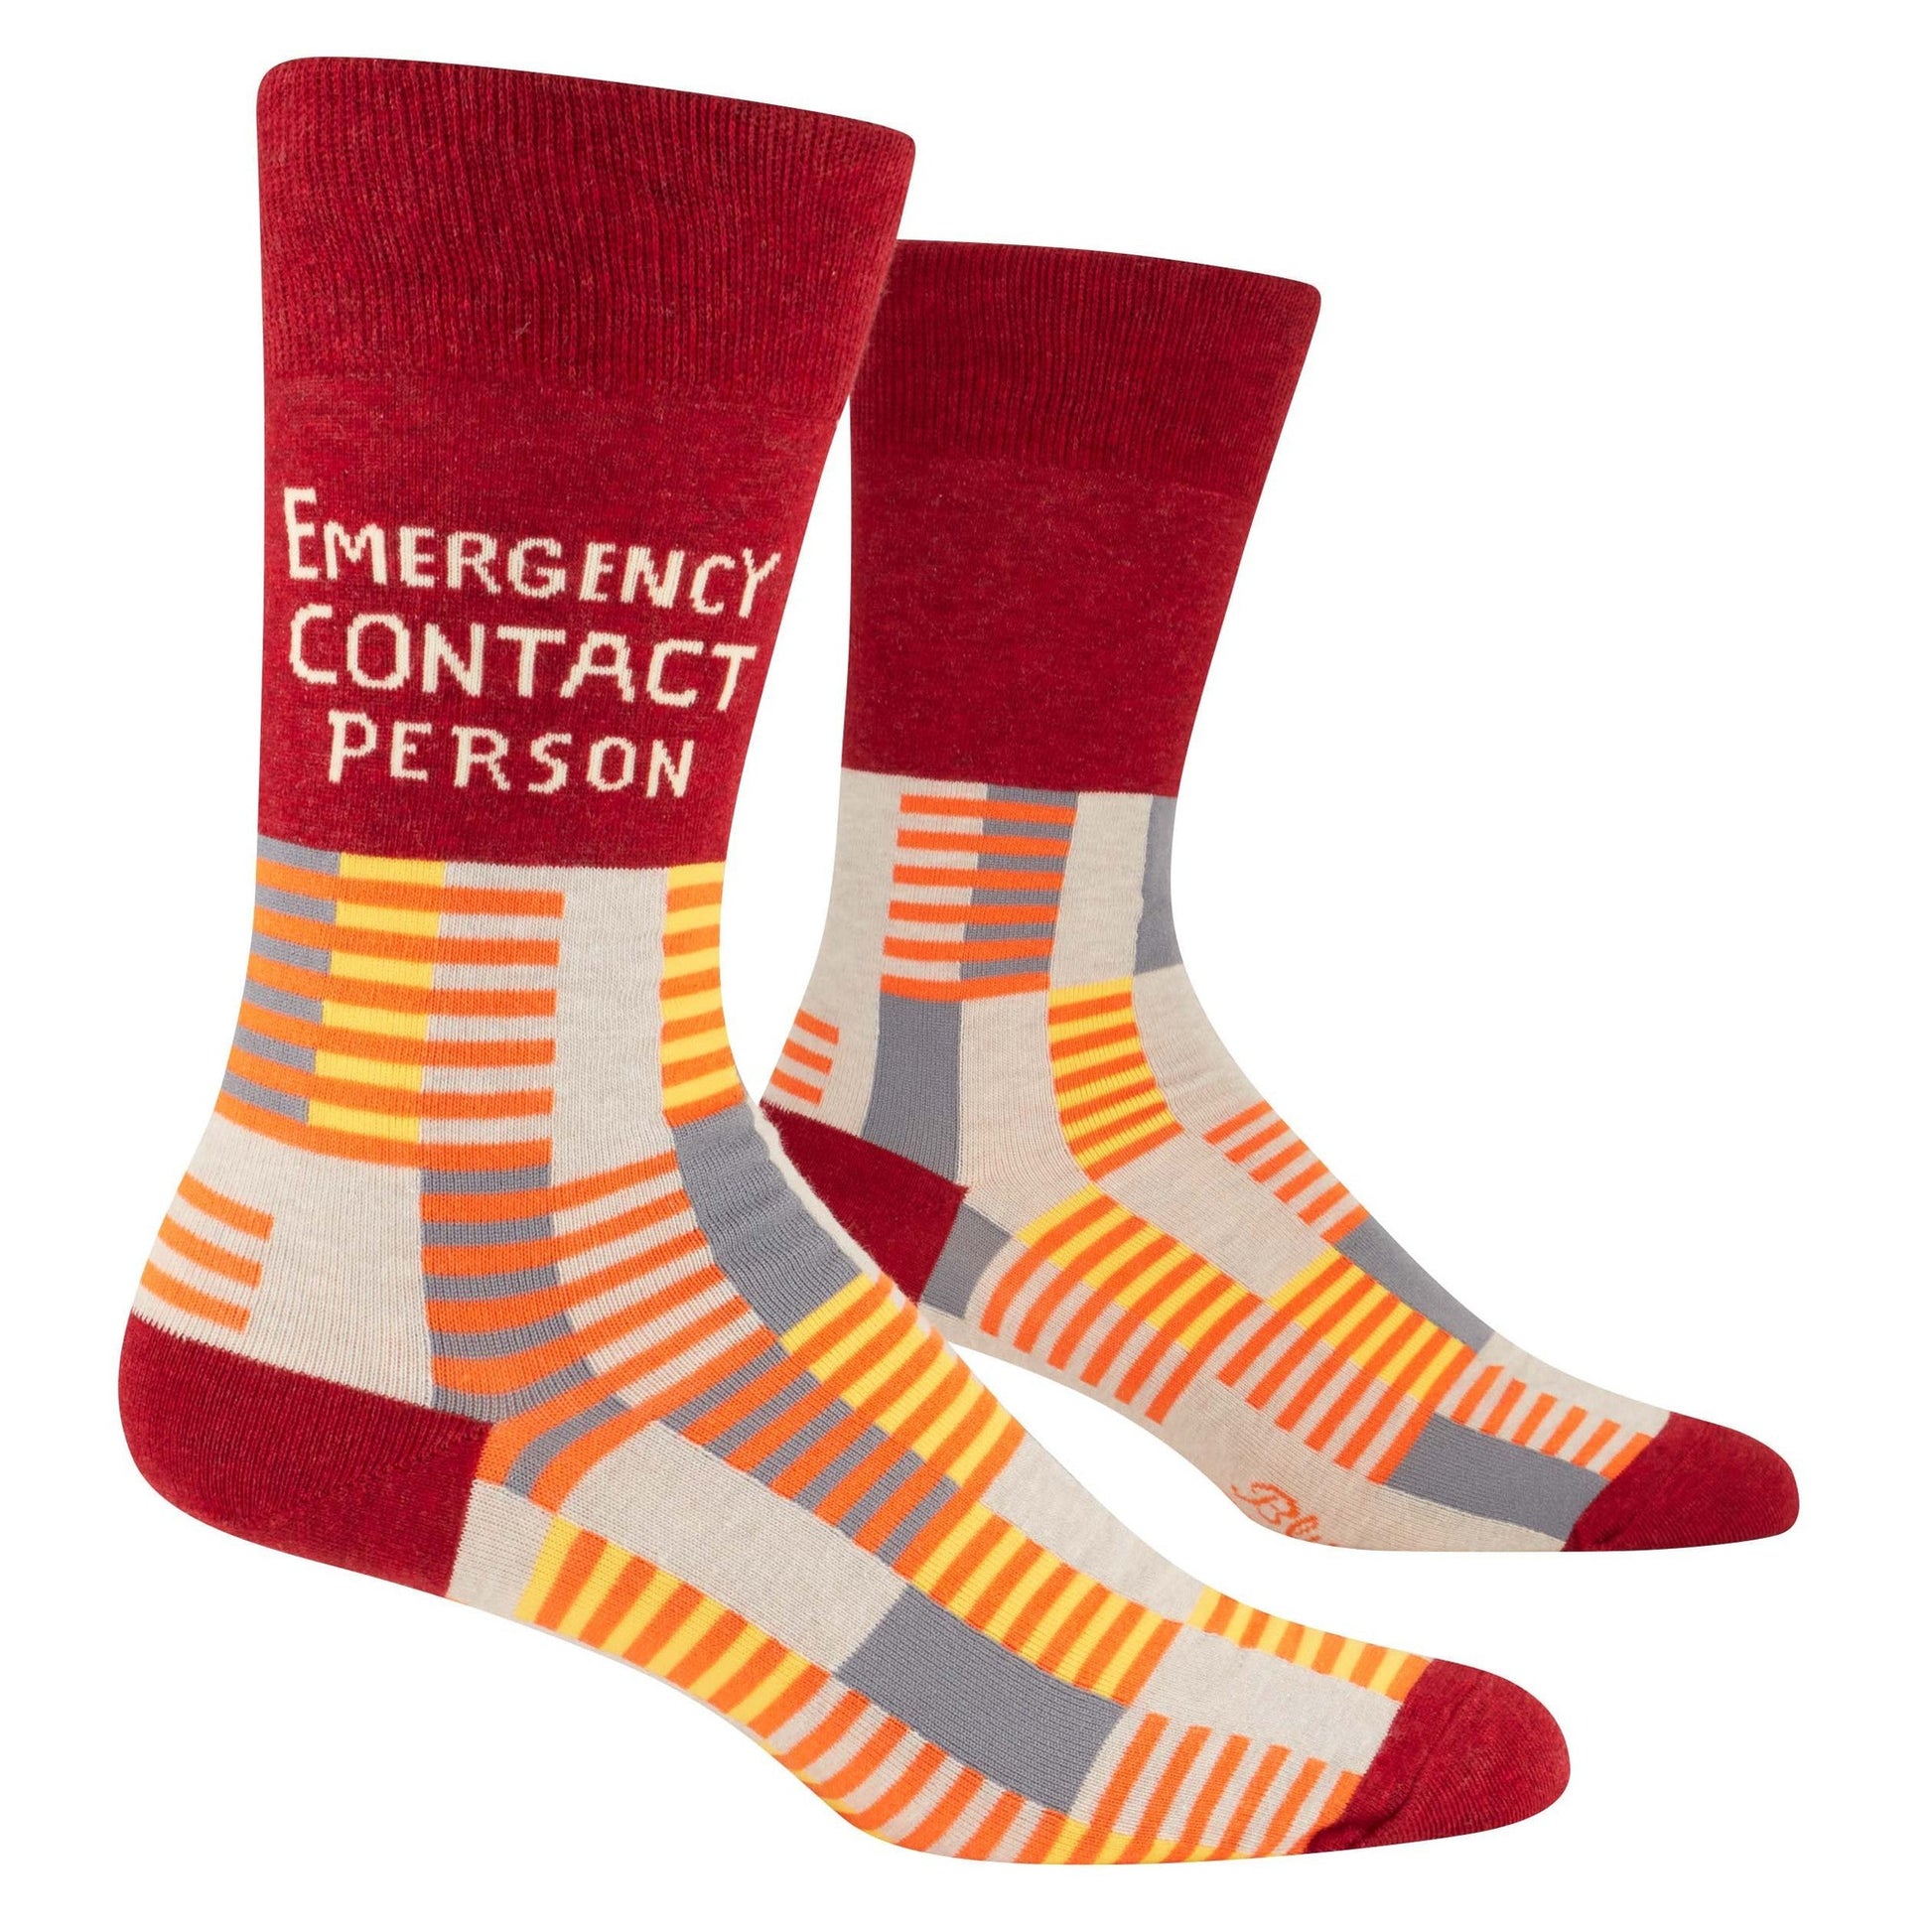 Emergency Contact Person Men's Crew Socks | Funny Text Novelty Socks